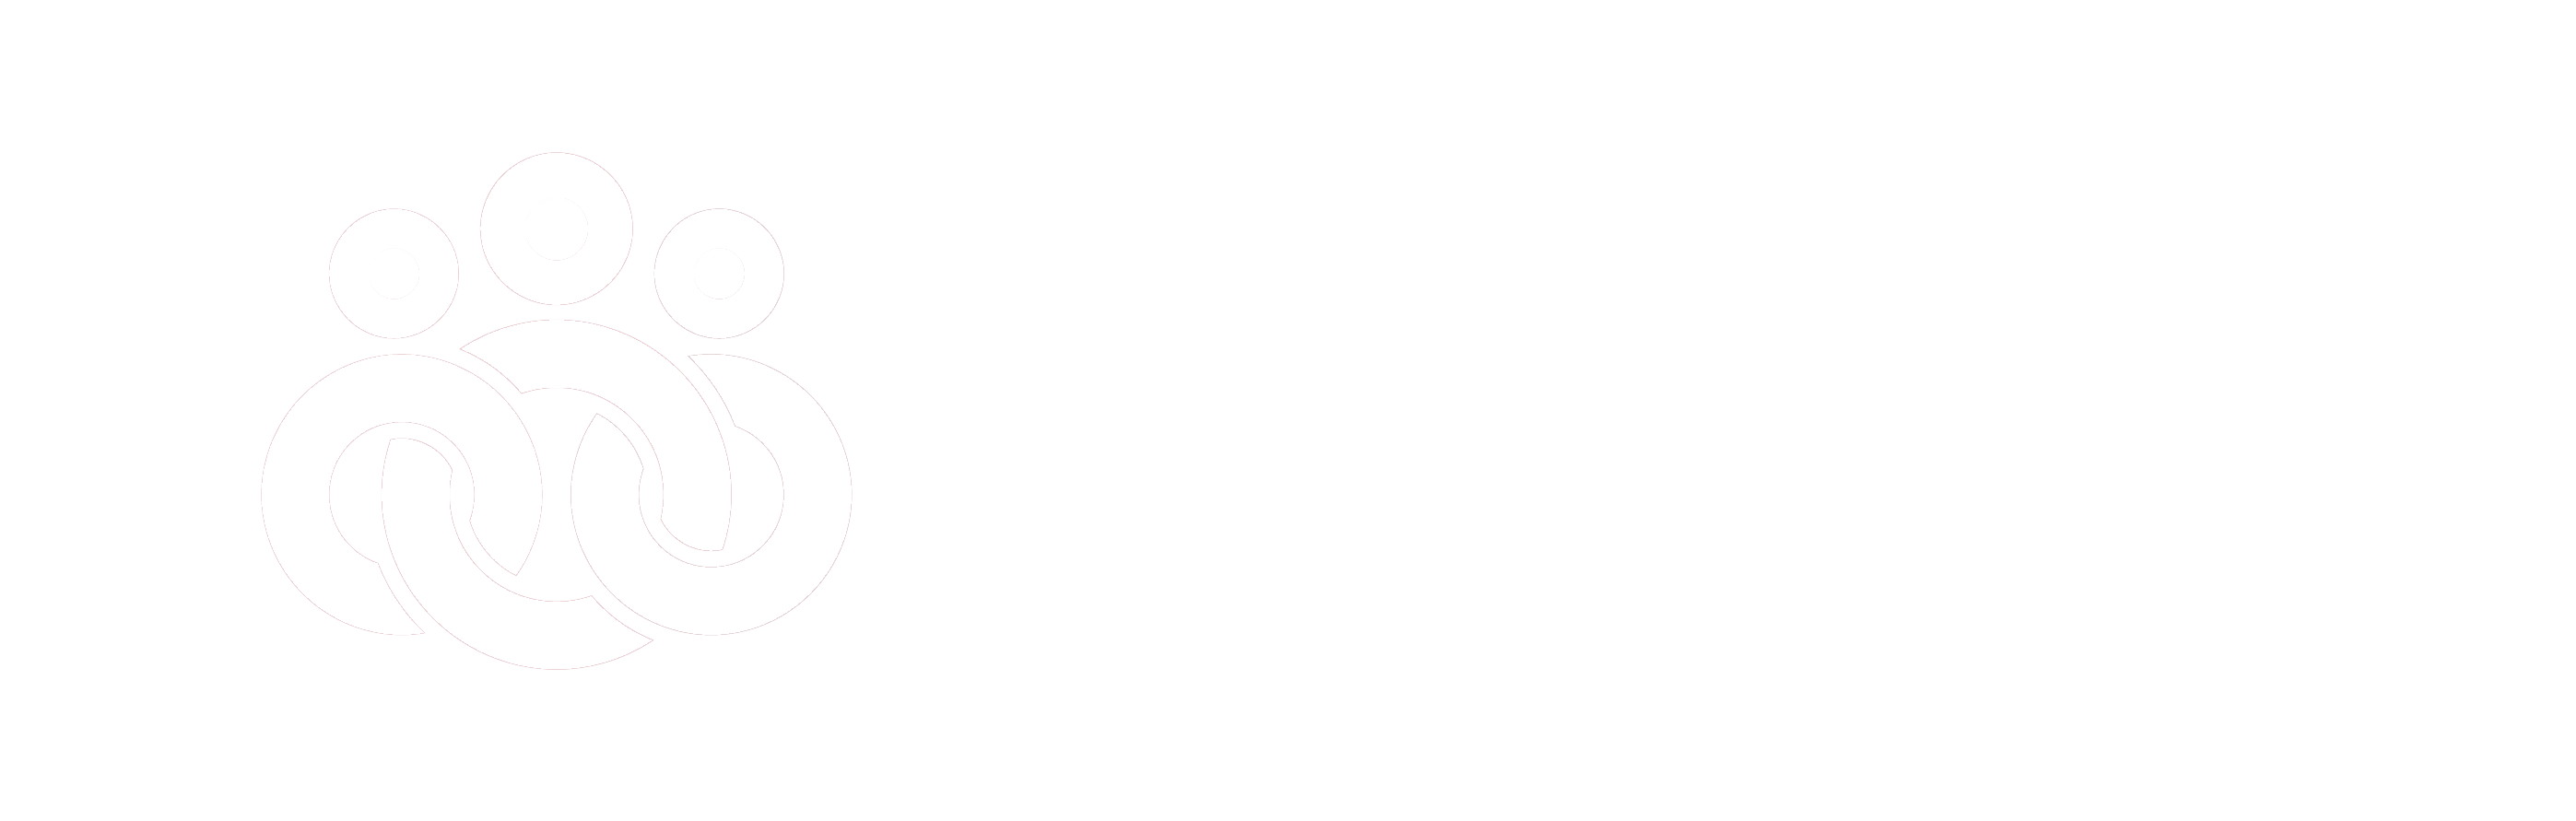 California Health Collaborative logo